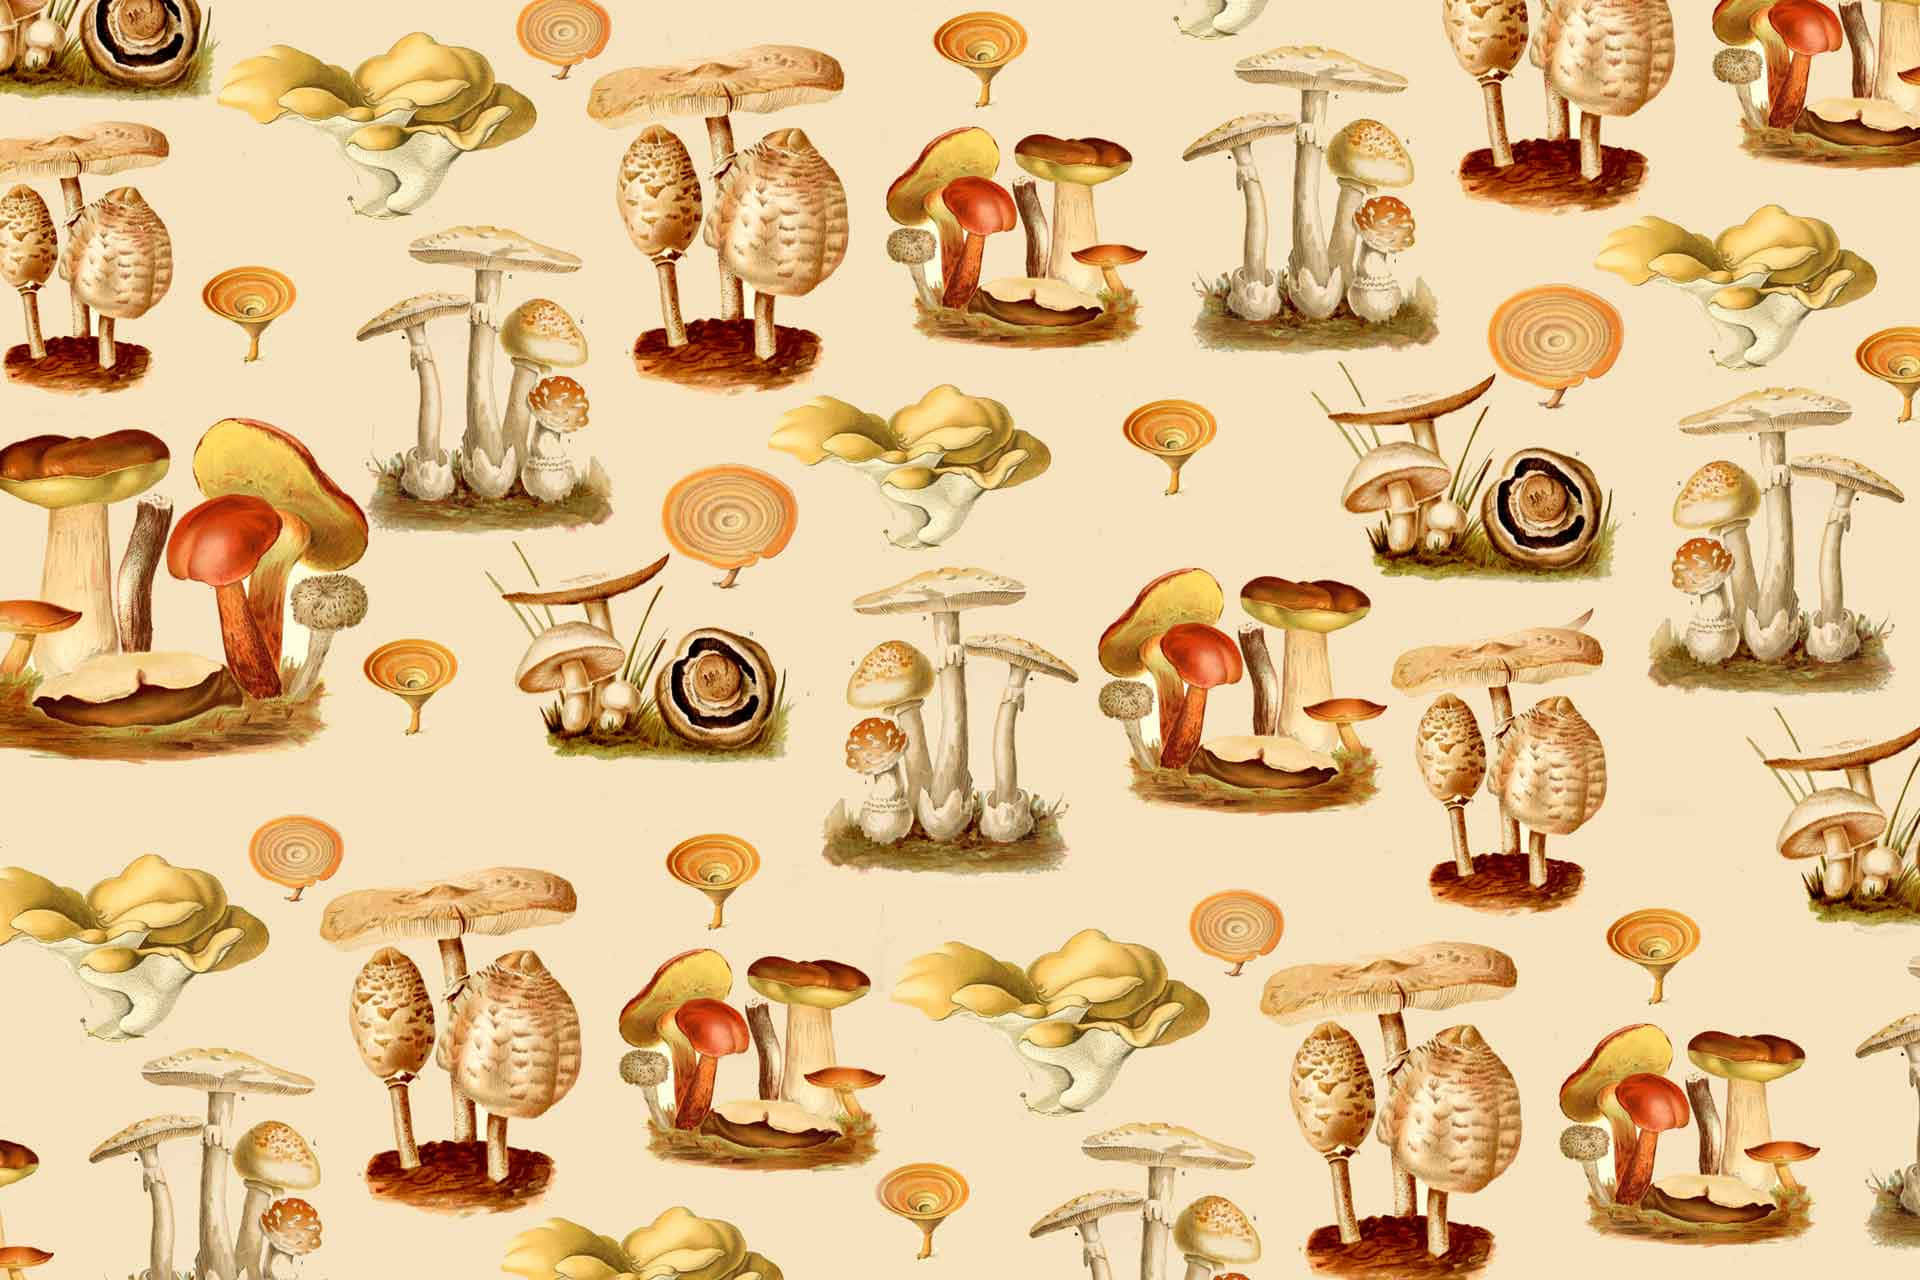 Fungus Vintage Poster Digital Art Background